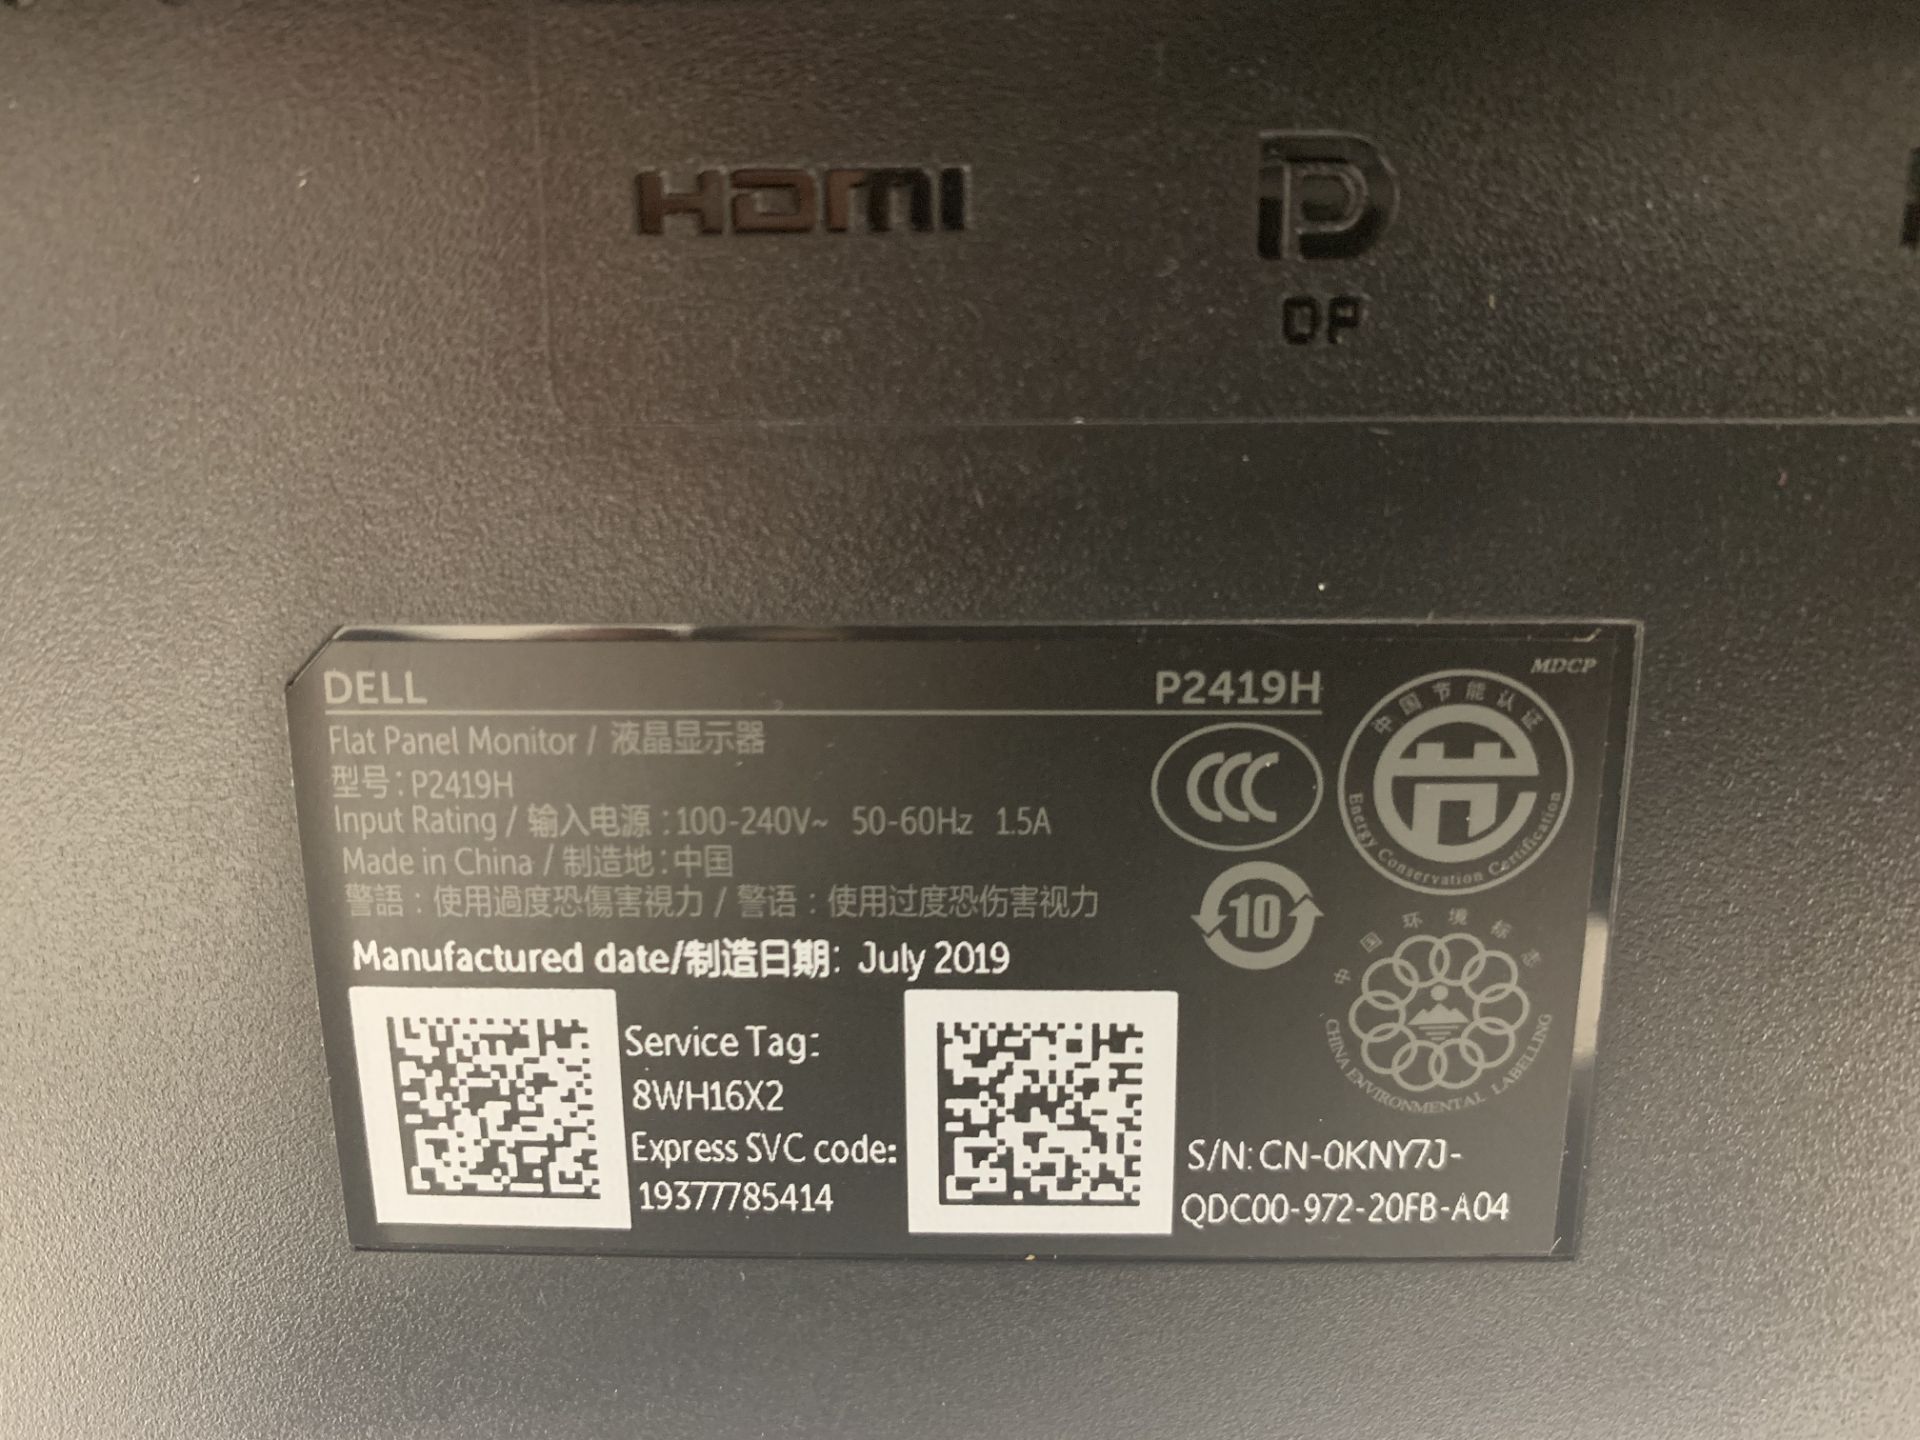 Dell Flat Panel Monitor P2419H Full HD LED IPS Monitor July 2019 - Image 2 of 4